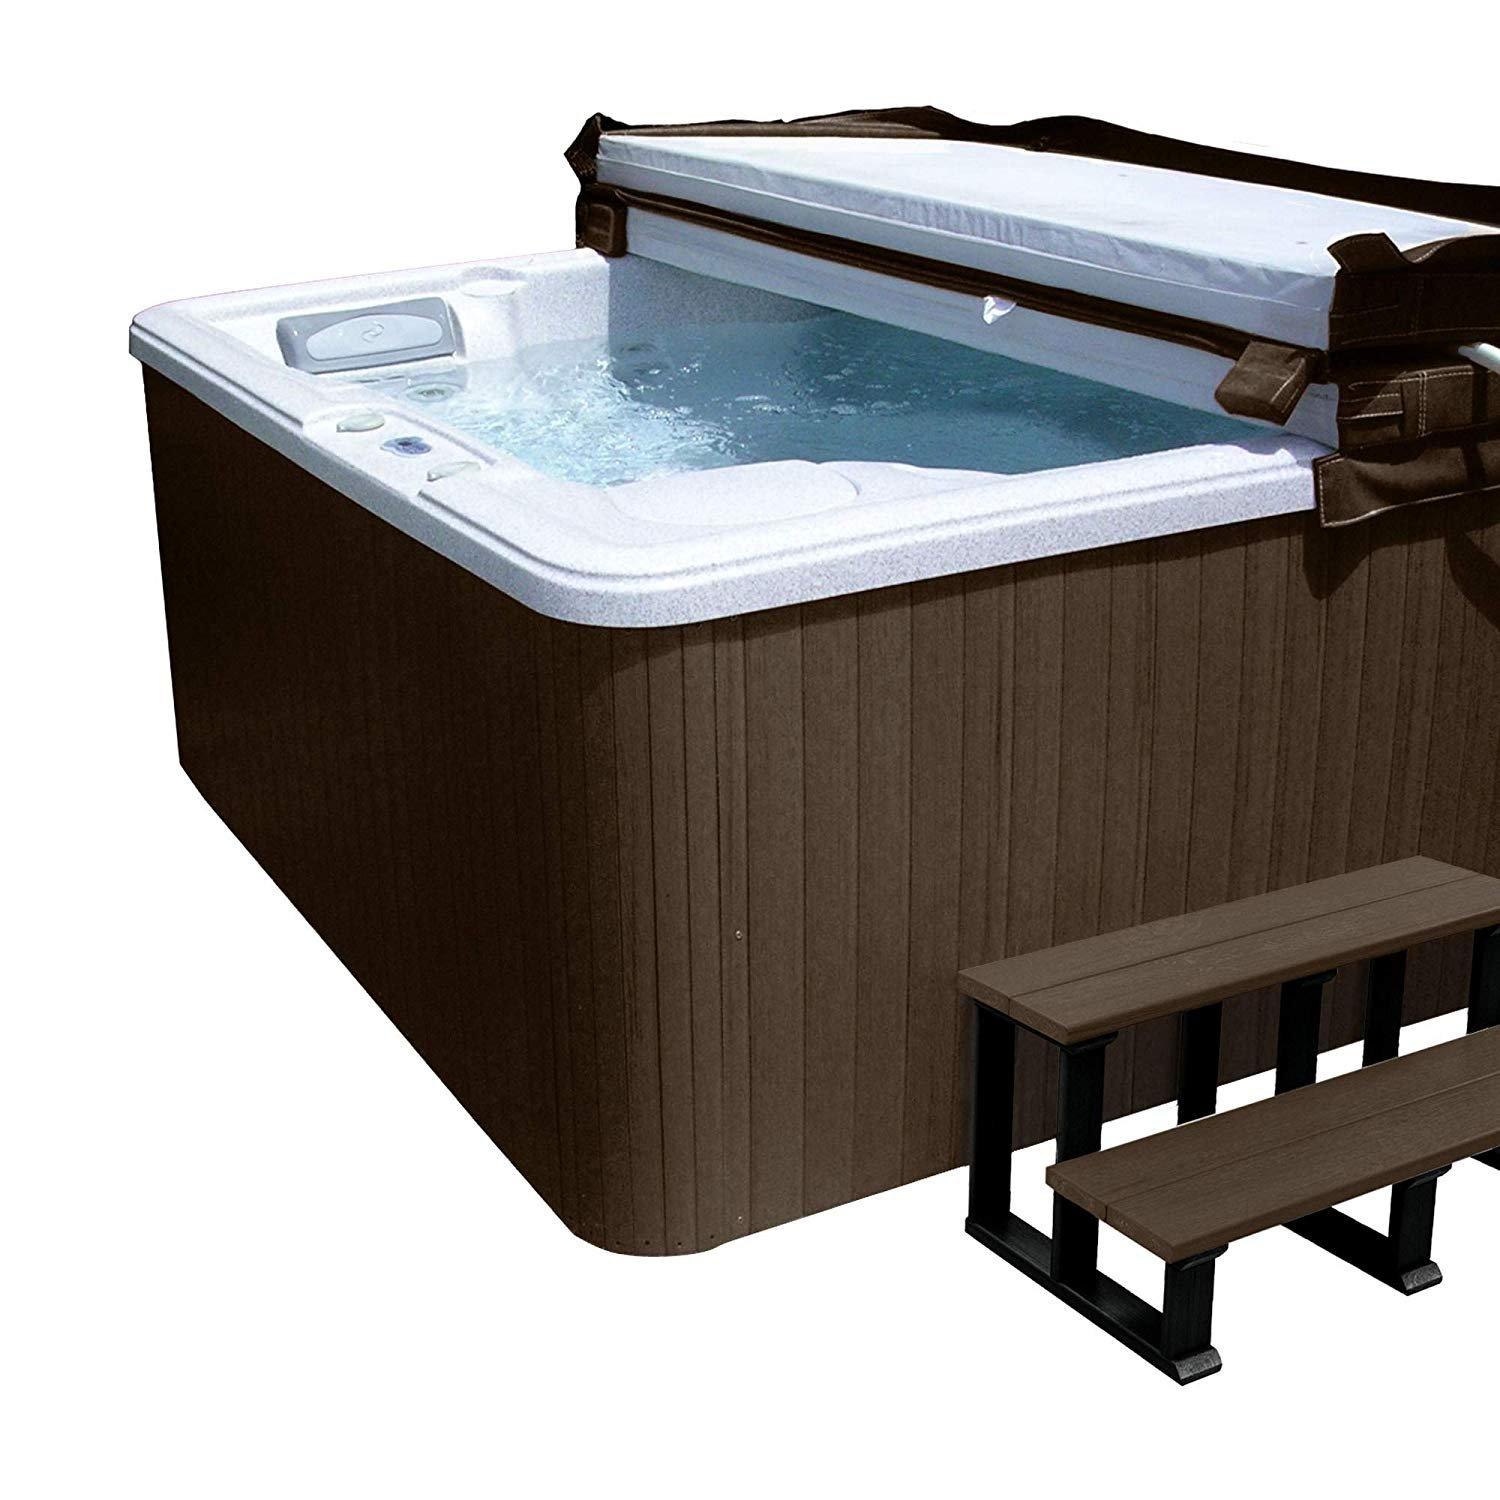 Spa Cabinets And Hot Tub Siding, Acorn